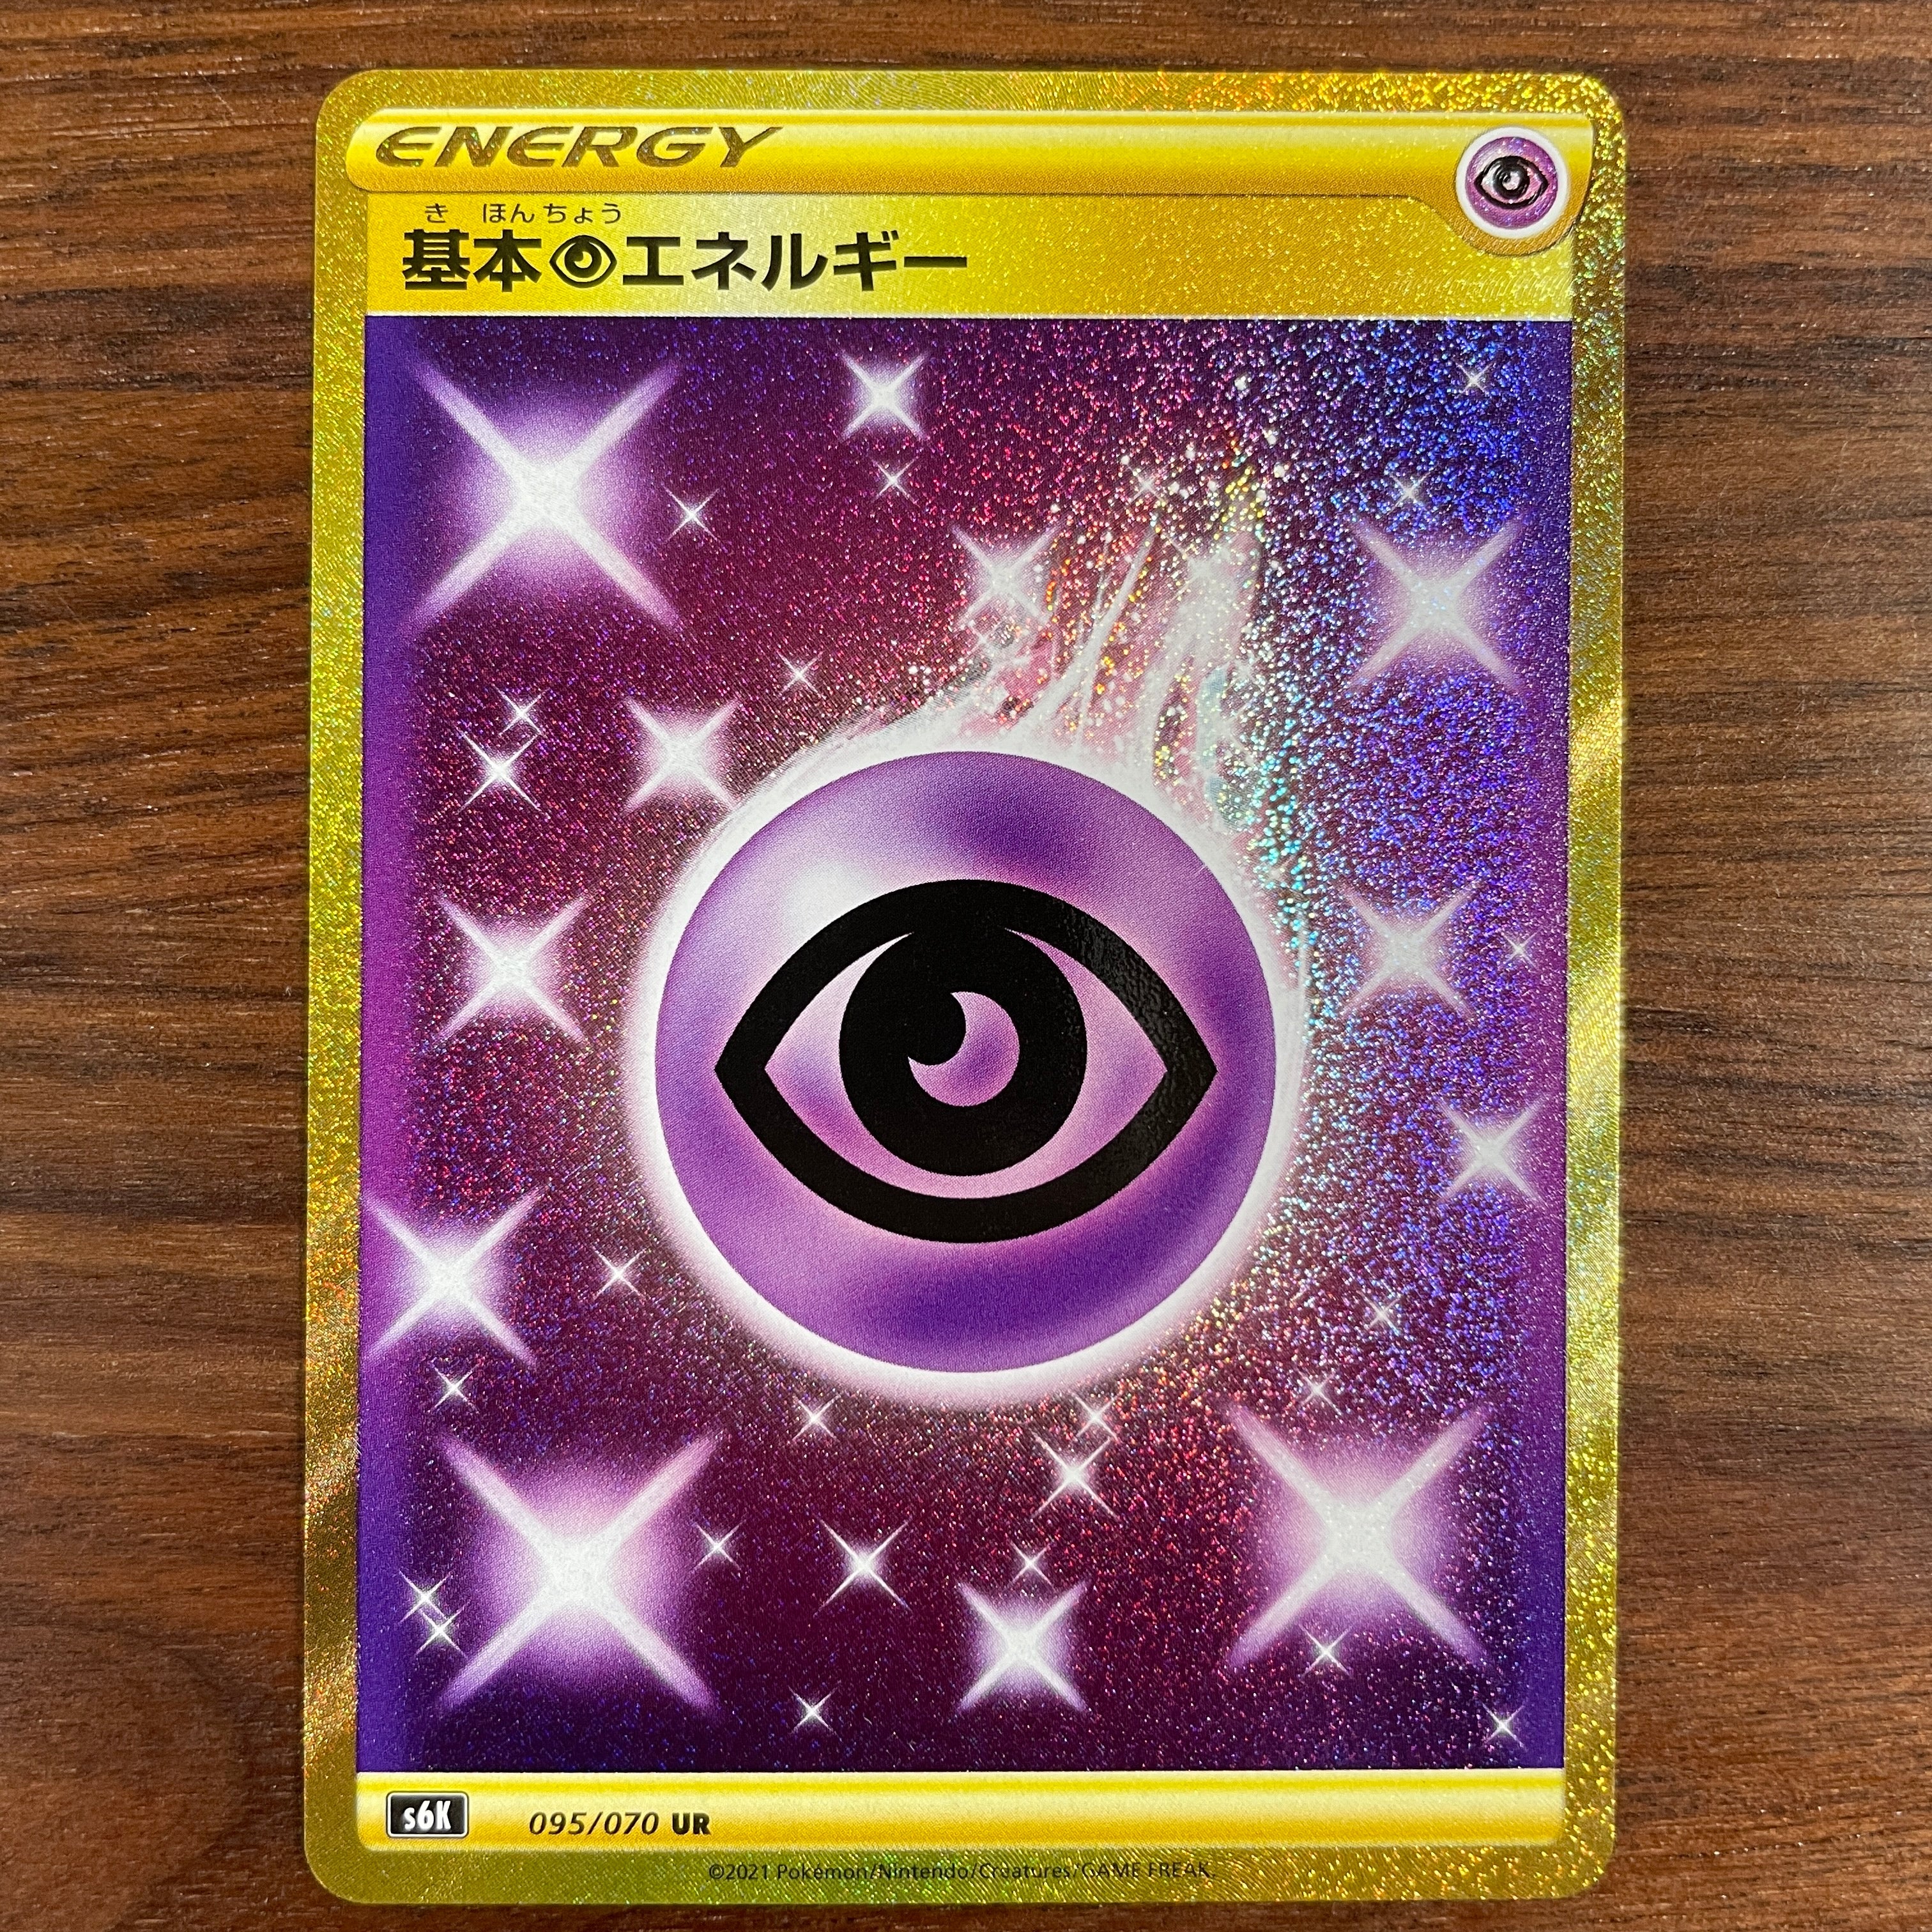 POKÉMON CARD GAME Sword & Shield Expansion pack ｢Jet-Black Poltergeist｣  POKÉMON CARD GAME S6K 095/070 Ultra Rare card  Basic Energy